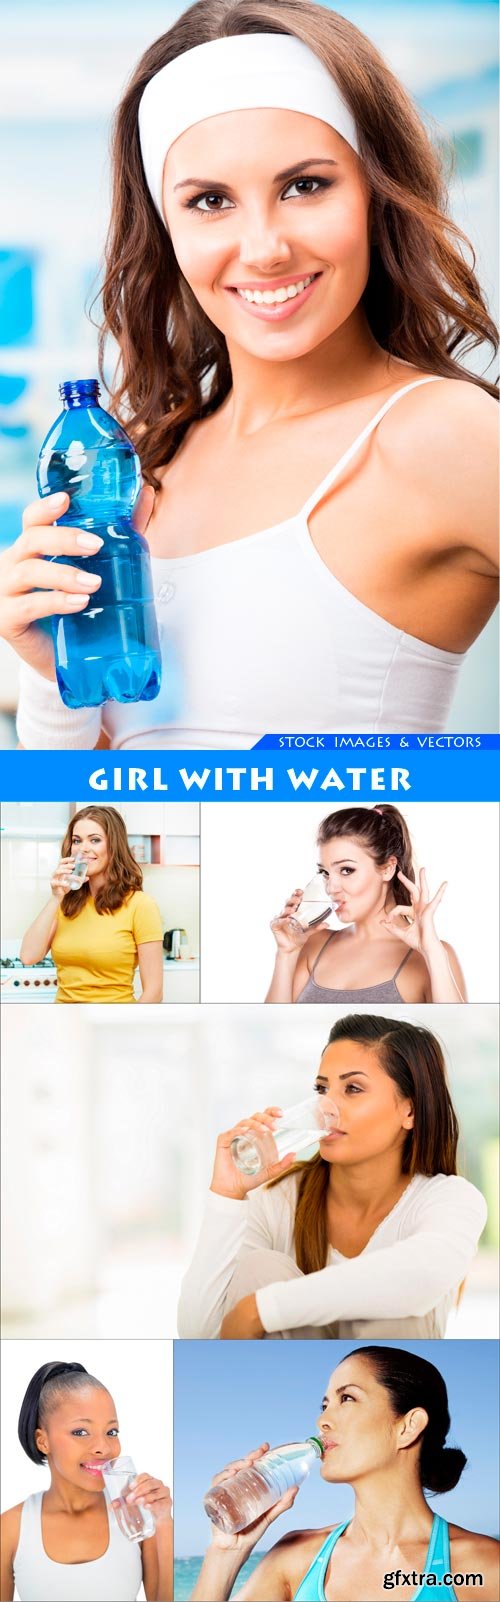 Girl with water 6X JPEG